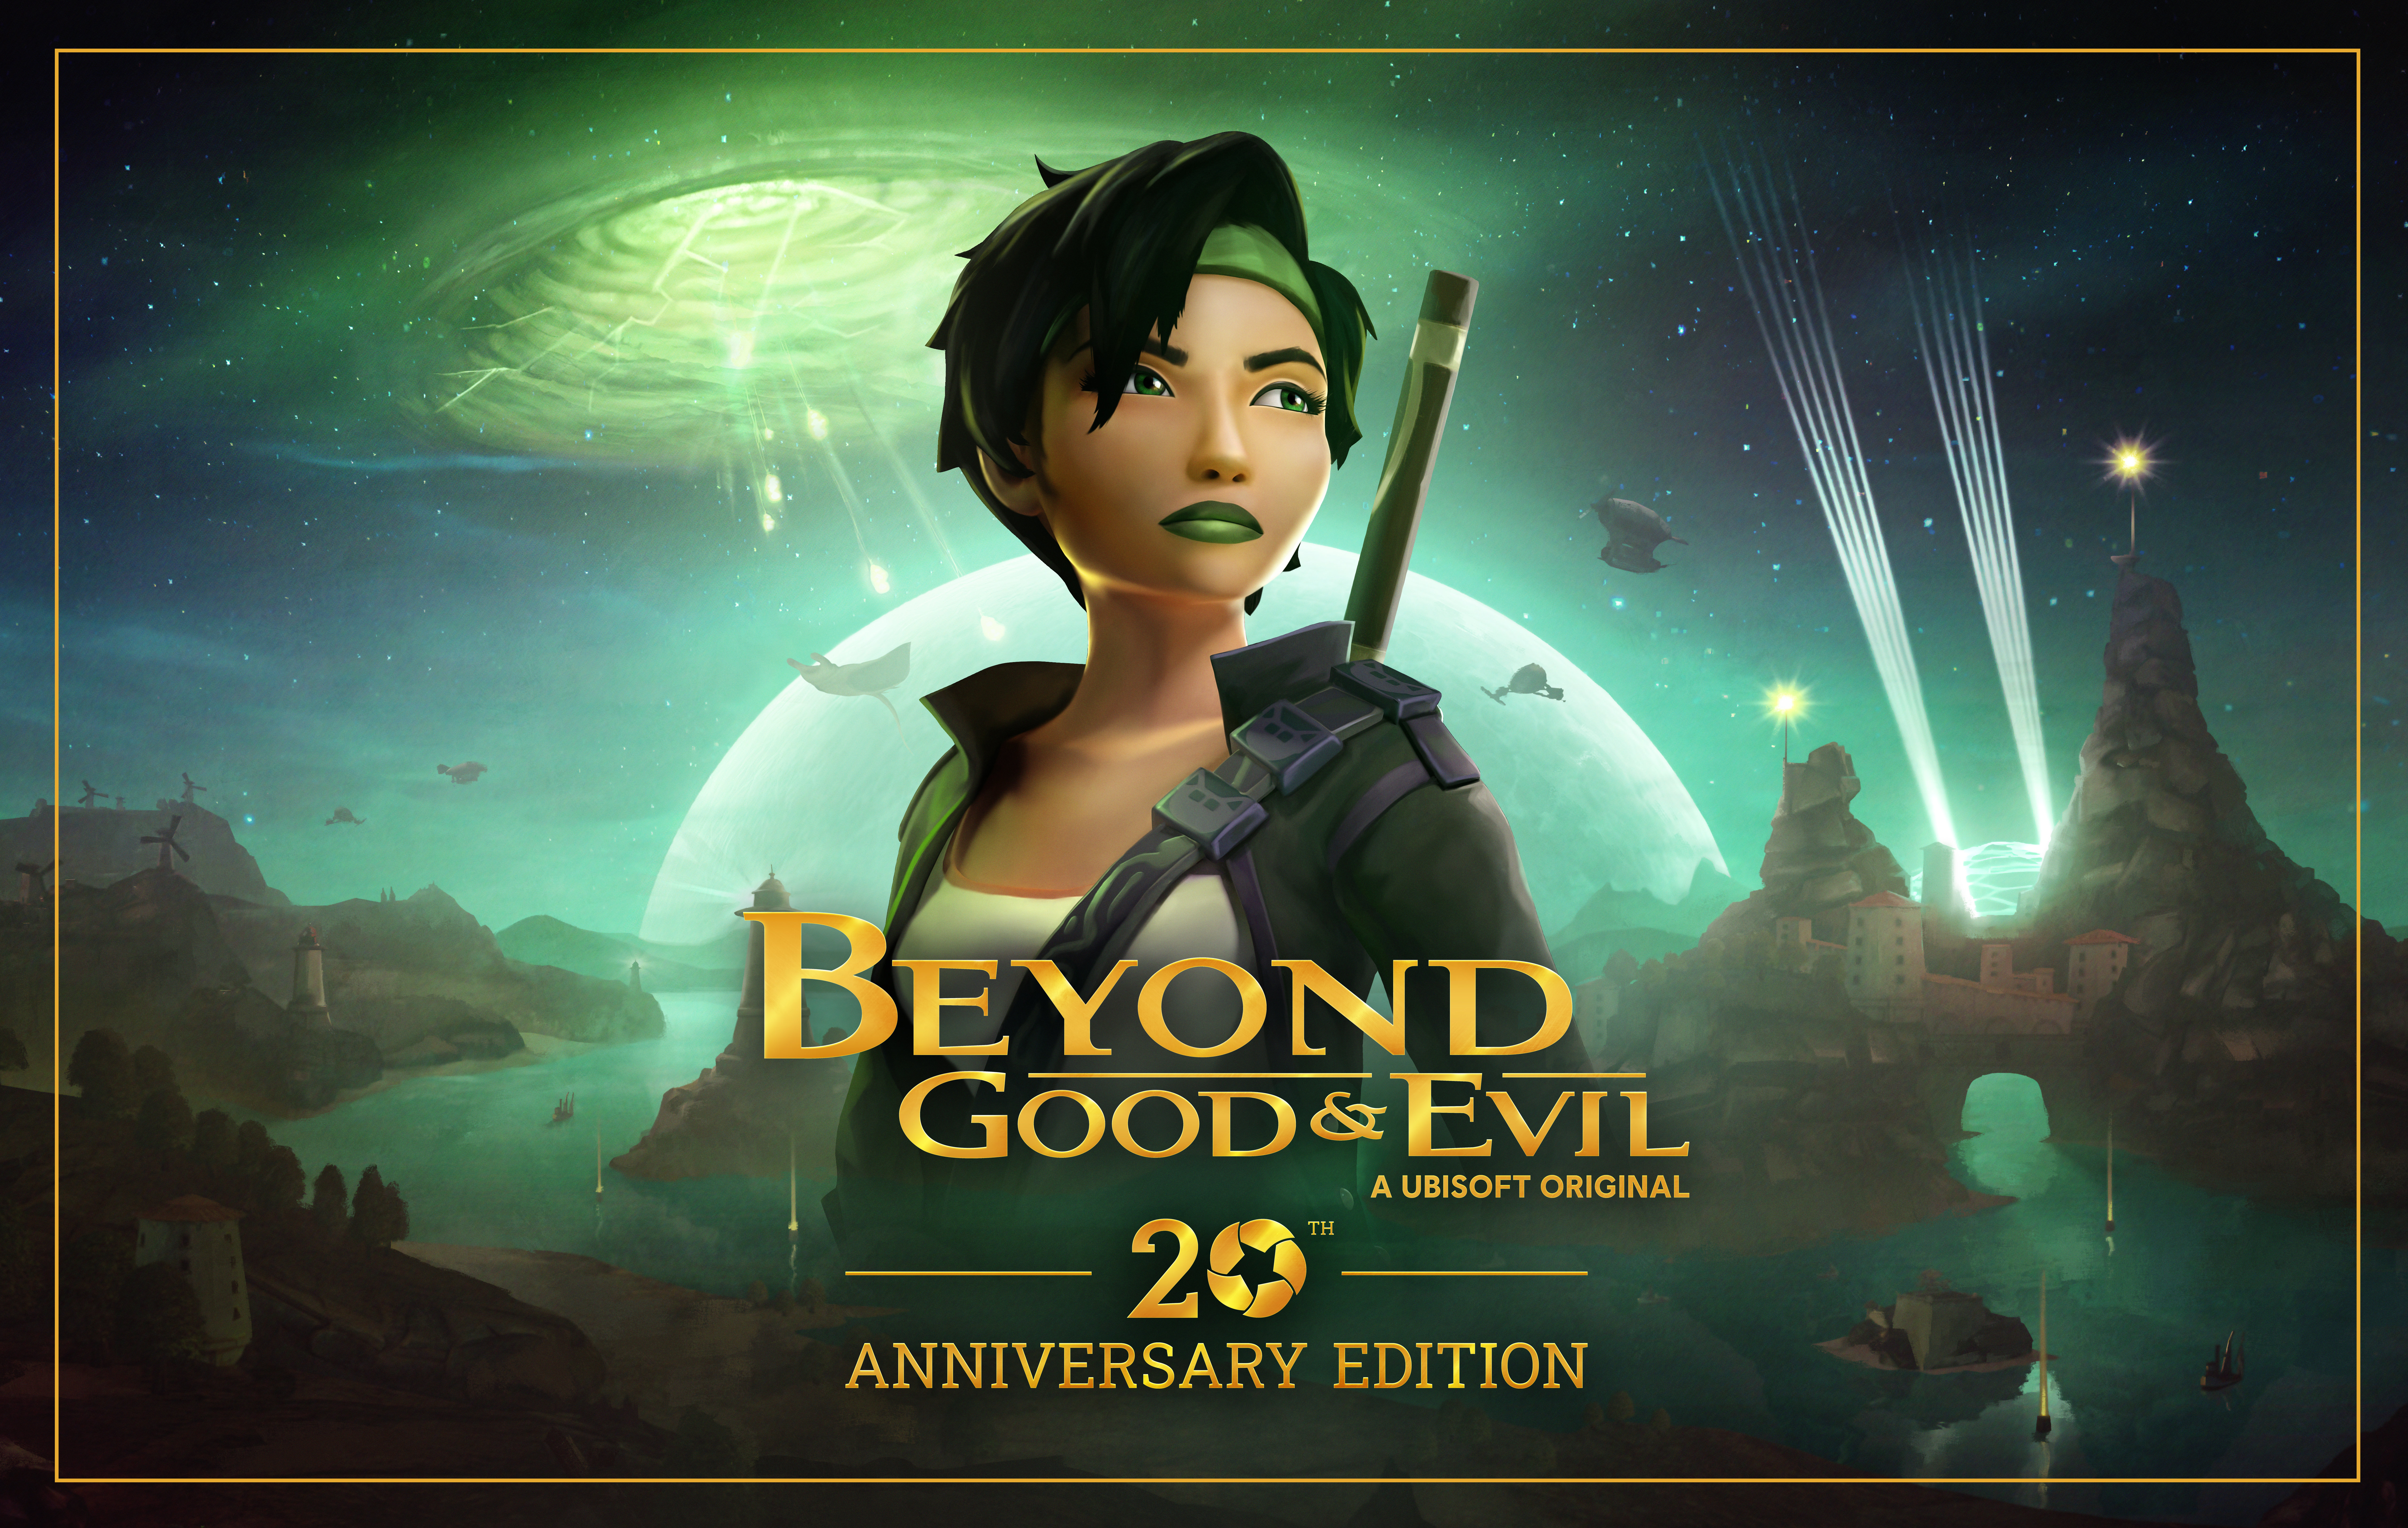 Beyond Good & Evil 20th Anniversary Edition